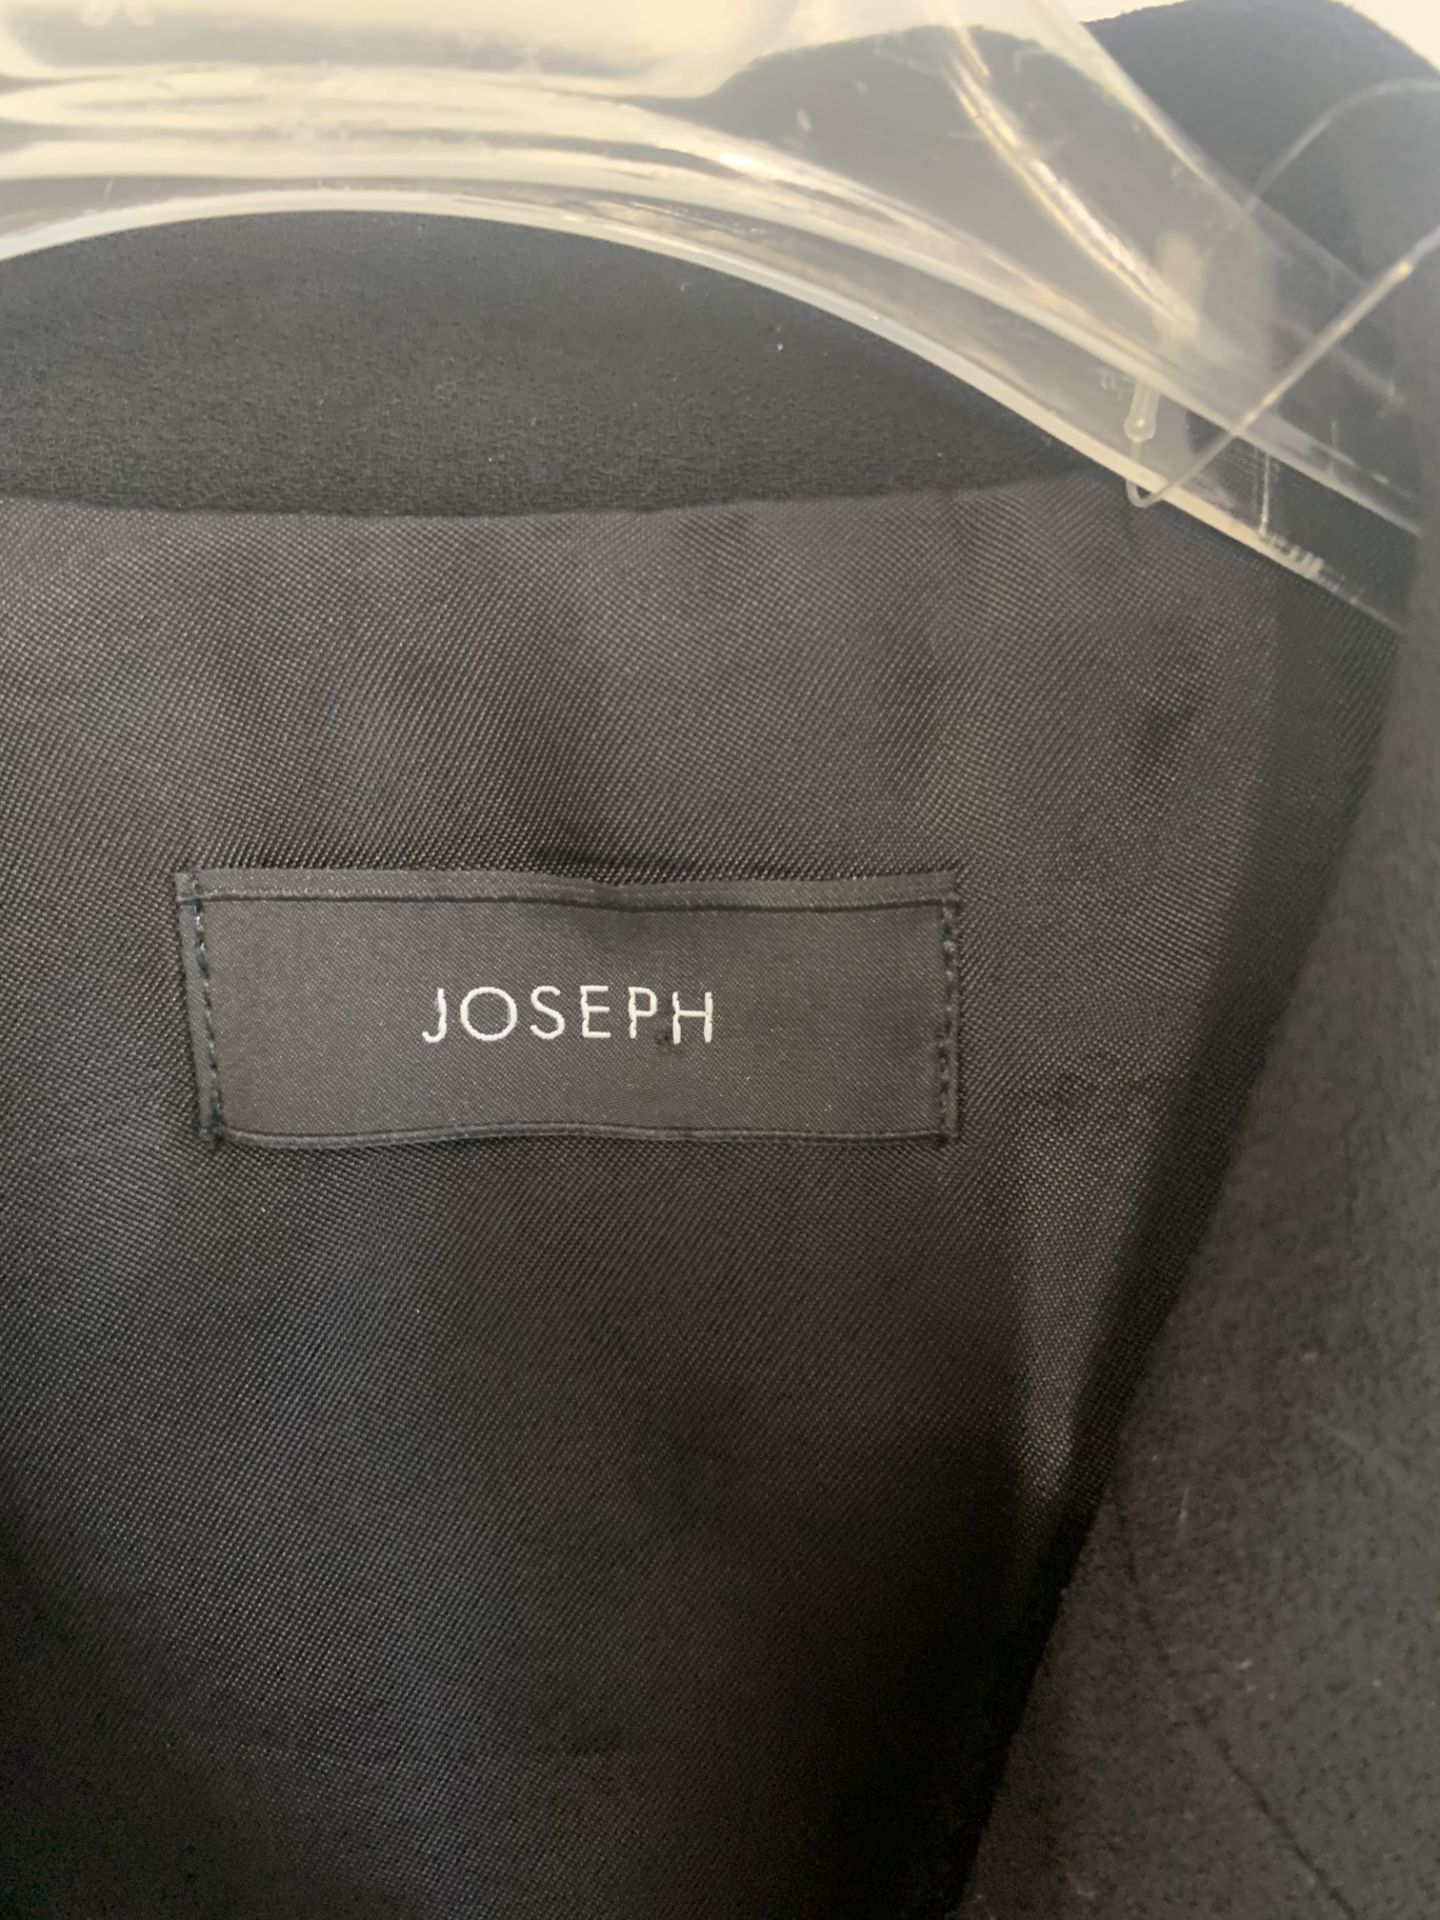 Joseph stretch fit blazer | RRP £695.00 - Image 2 of 3